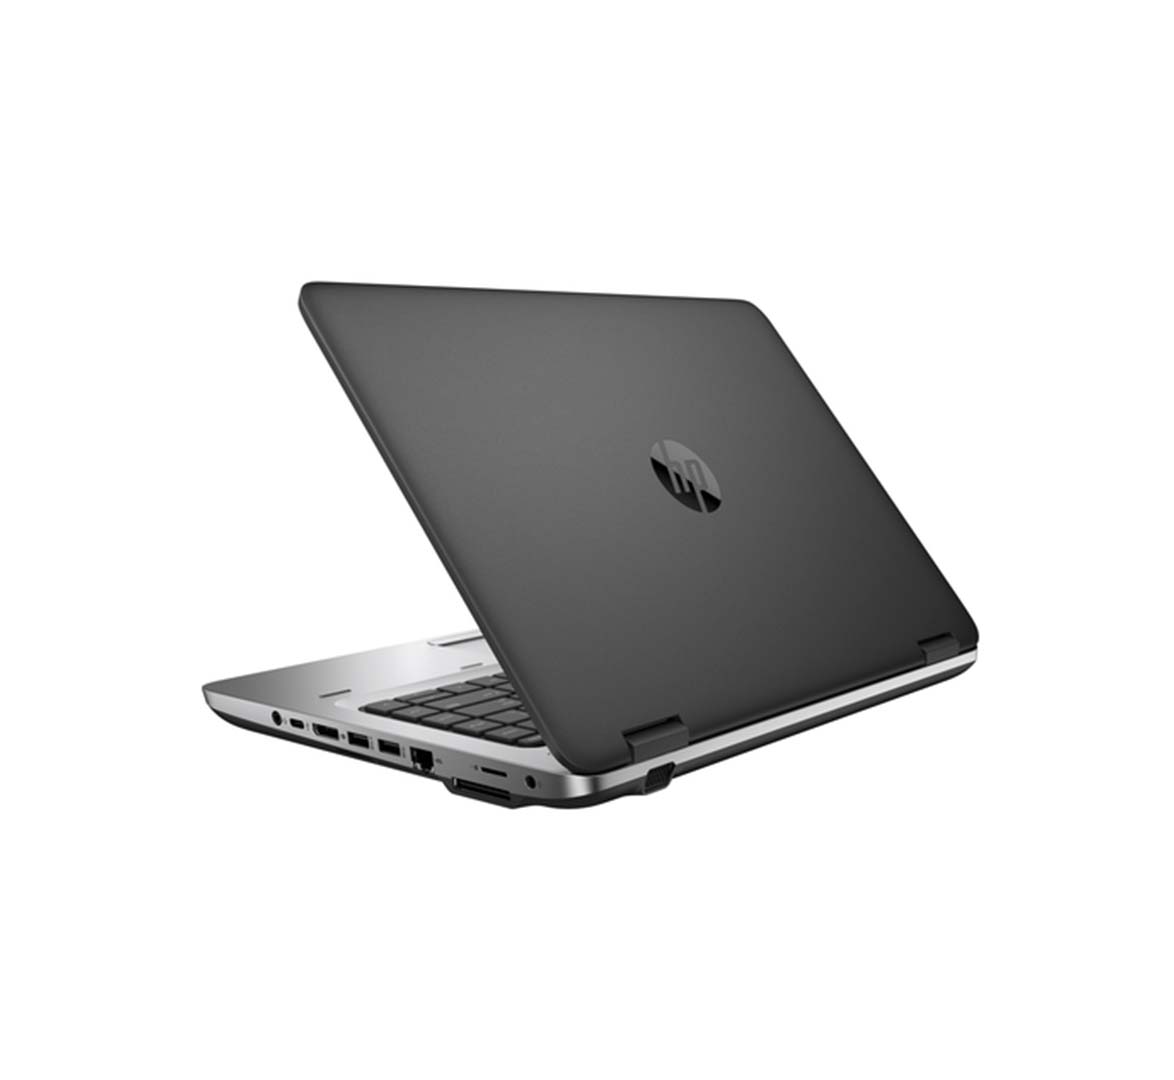 HP ProBook 645 G2 Business Laptop, AMD A10 CPU, 8GB RAM, 256GB SSD, AMD RADEON R6, 14 inch Display, Windows 10 Pro, Refurbished Laptop